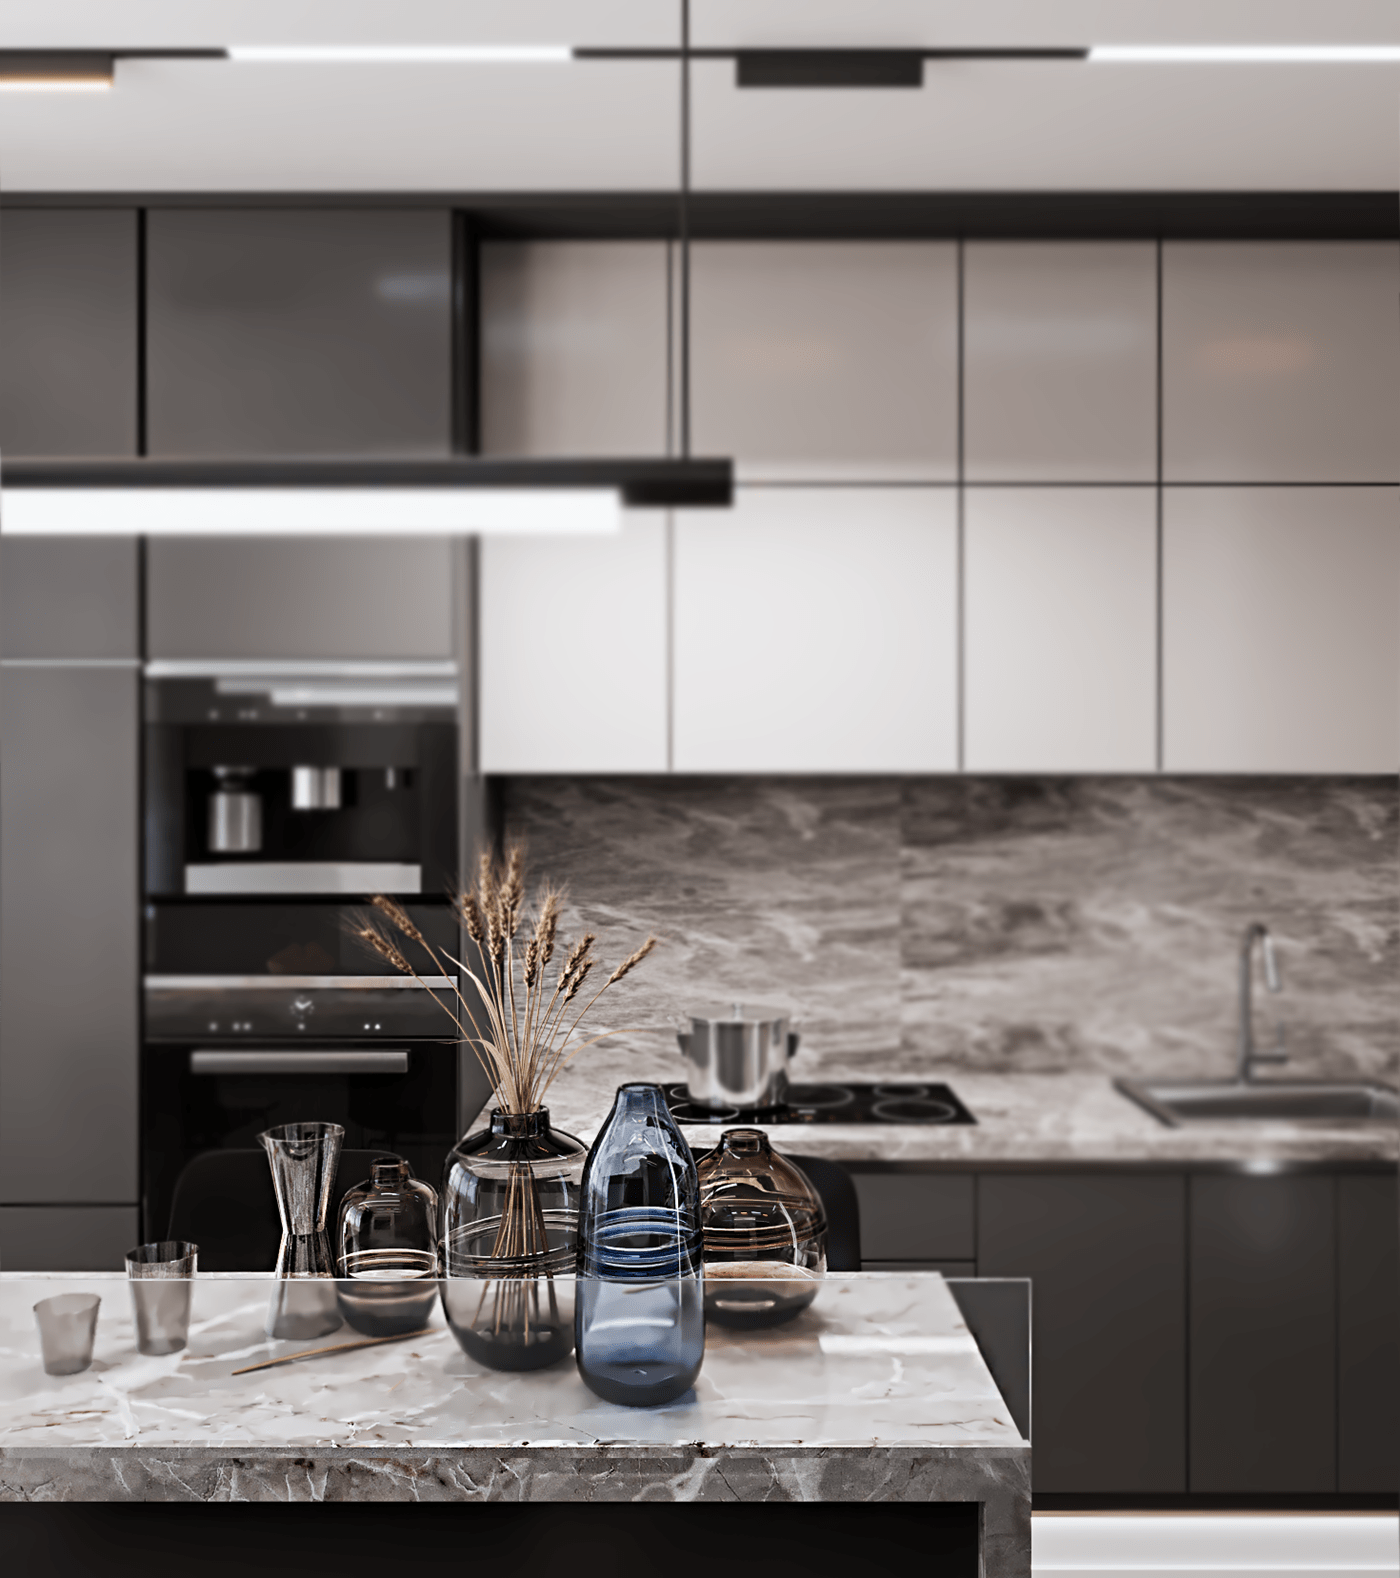 360 render bed room kitchen kuula living room modern interior visualisation дизайн интерьера